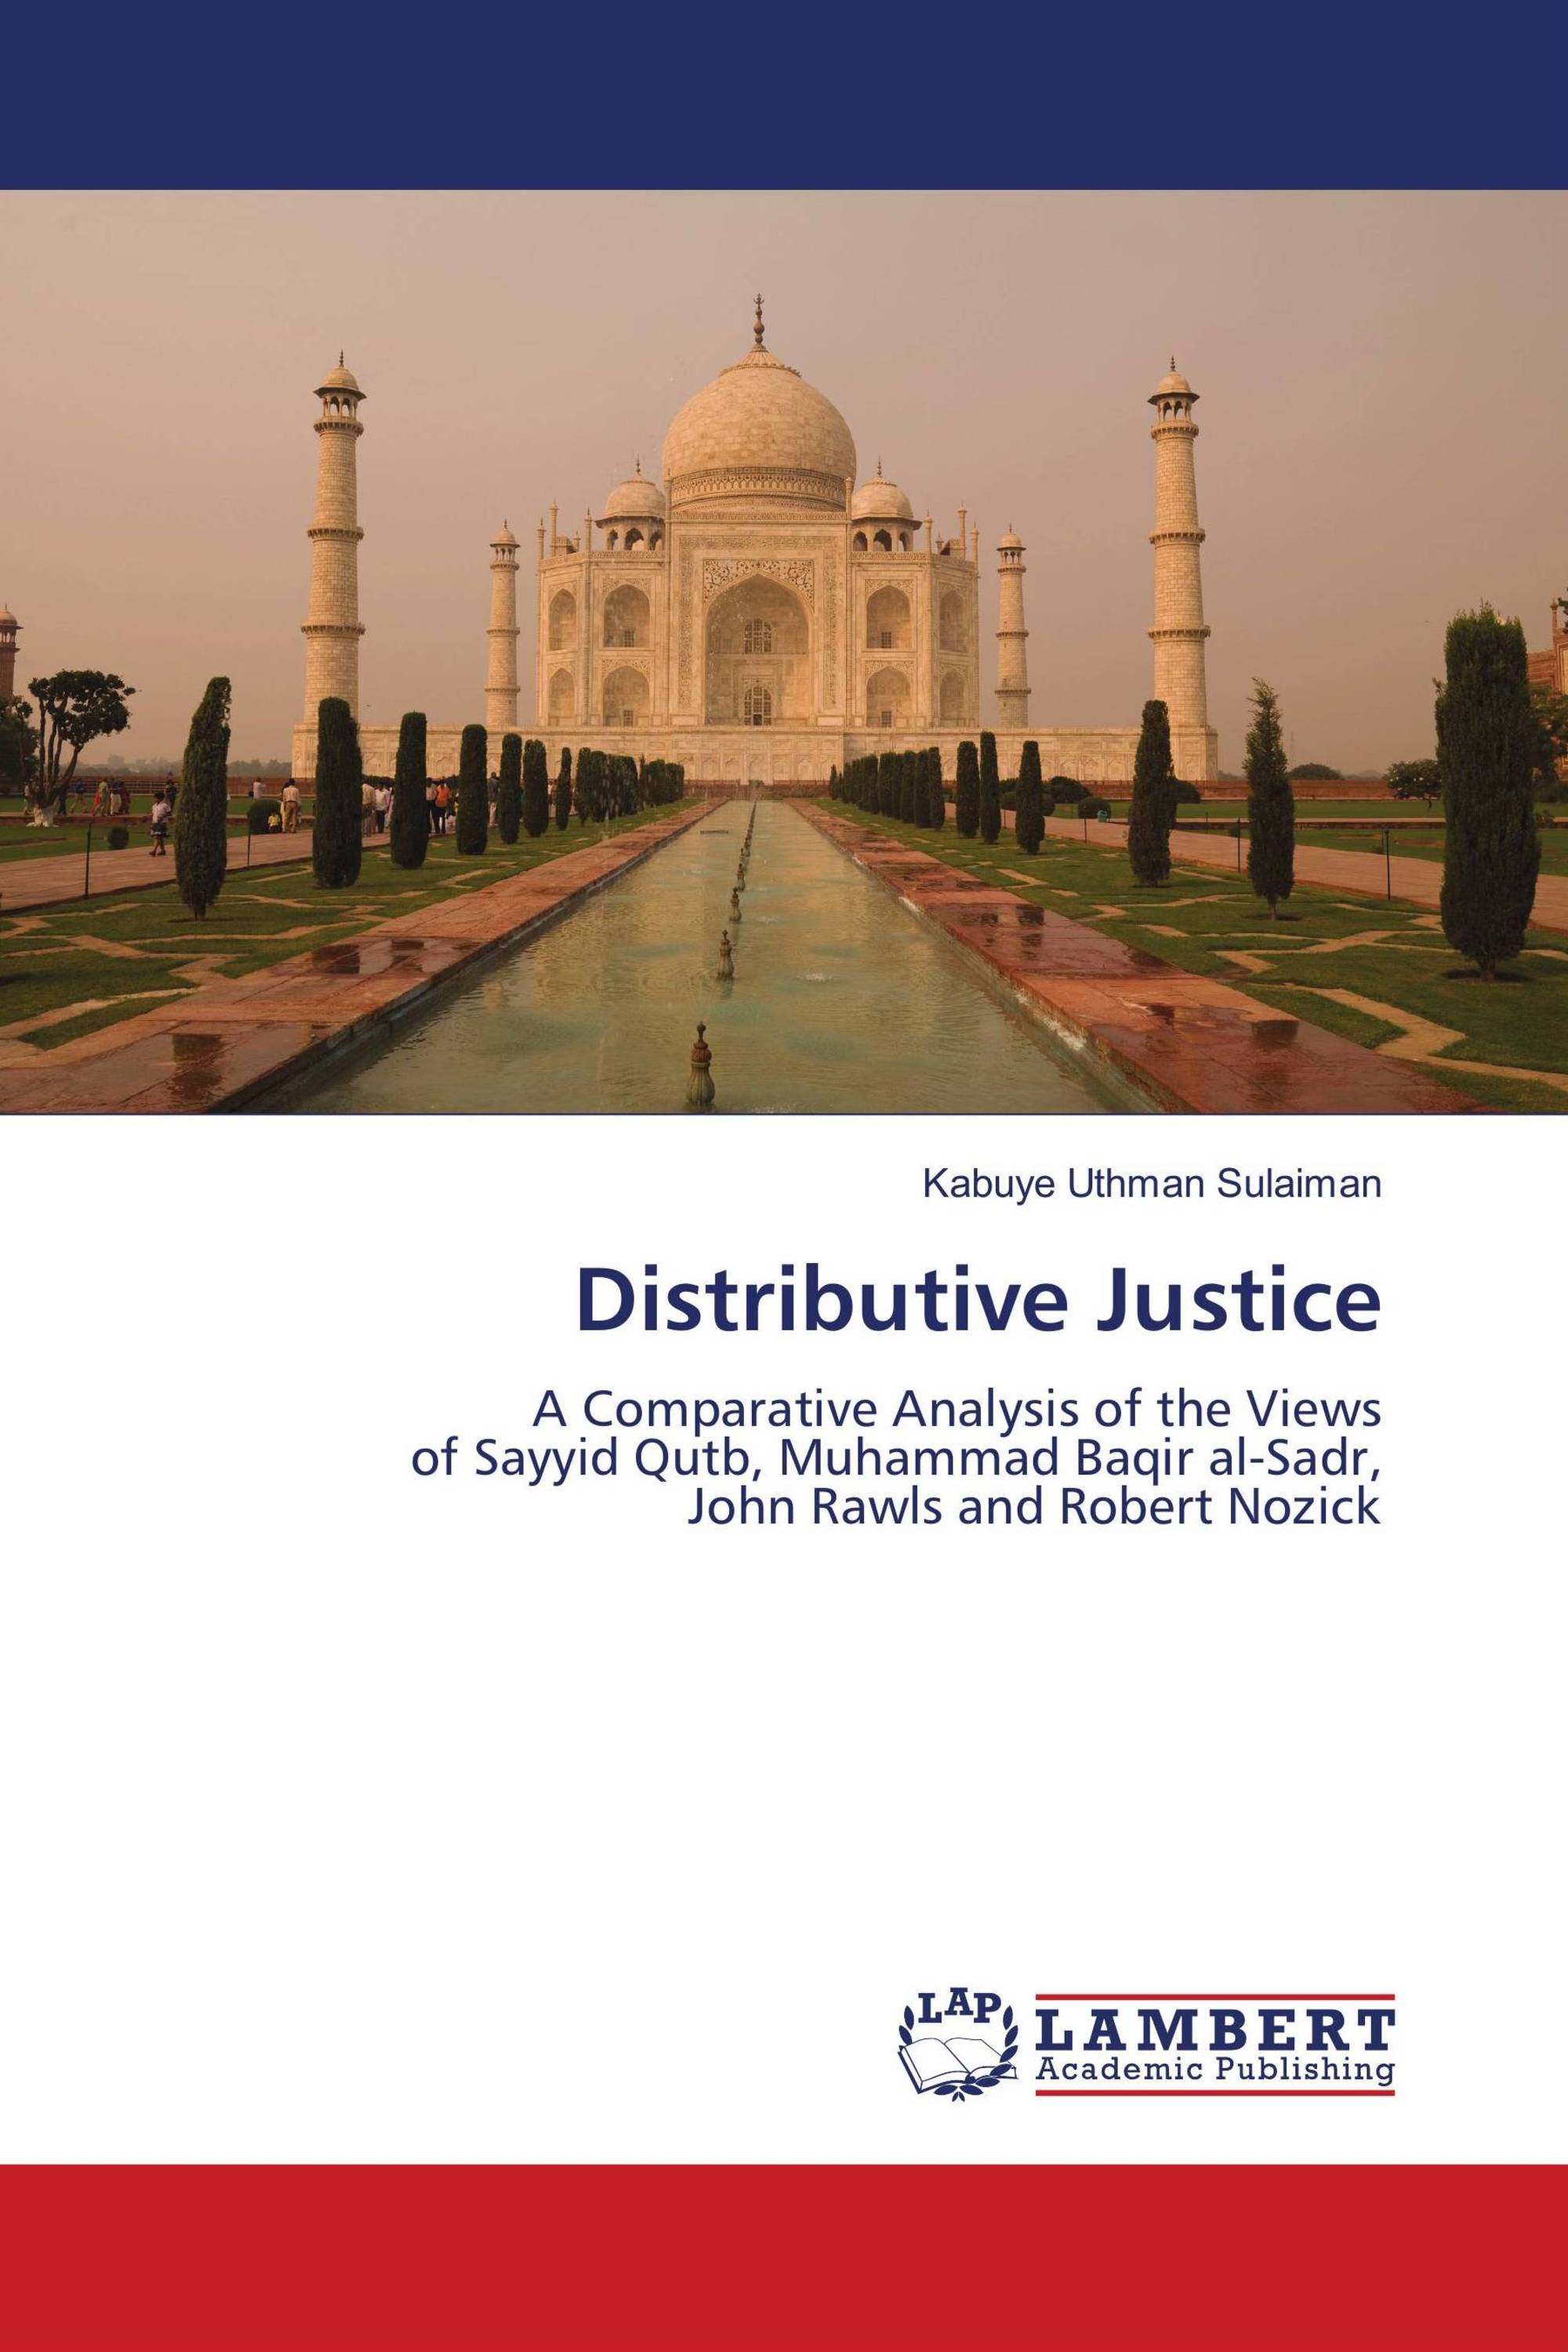 dissertation on distributive justice